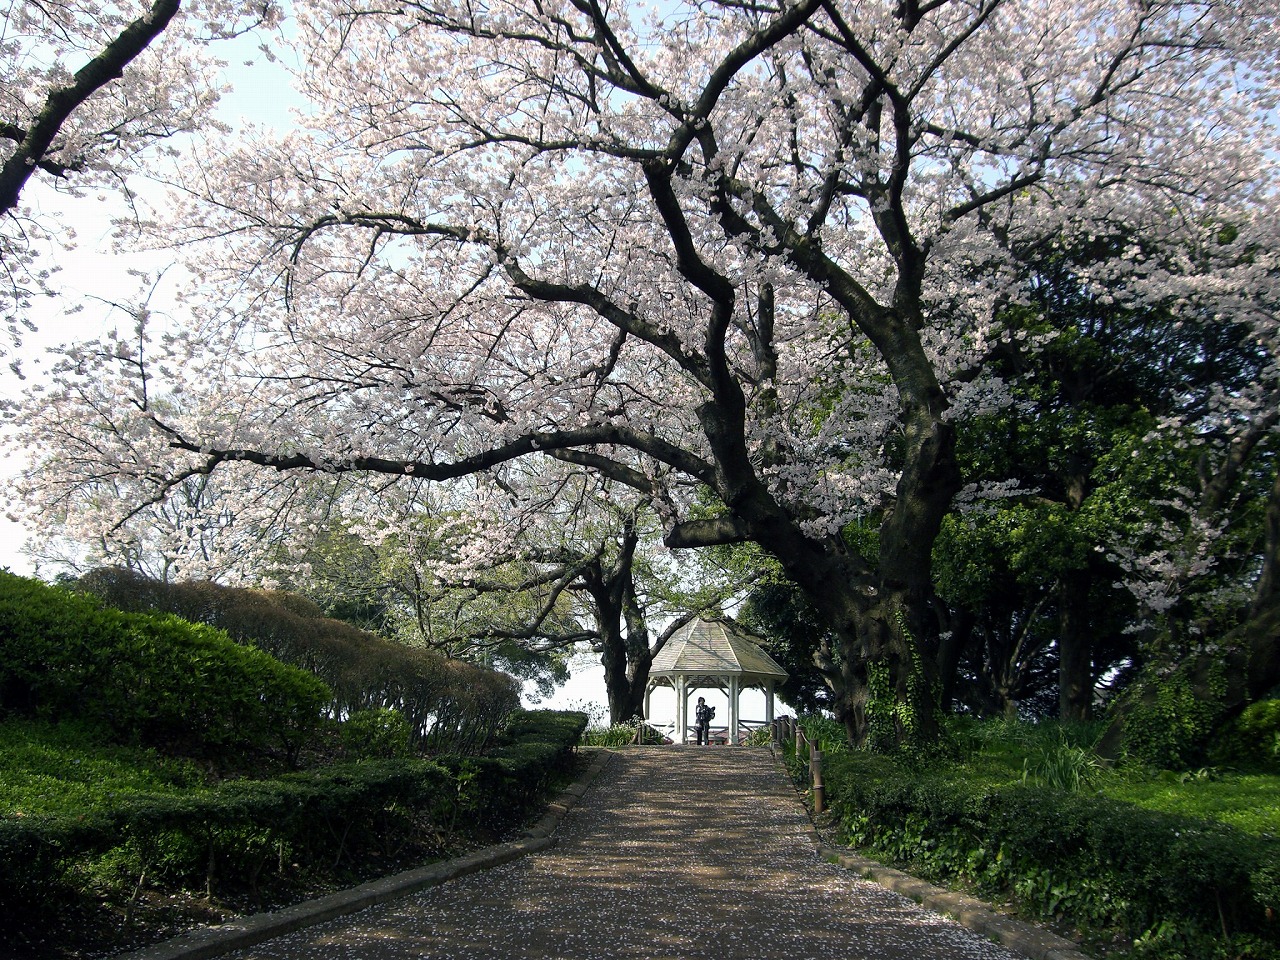 Cherry blossom @ Yamate park